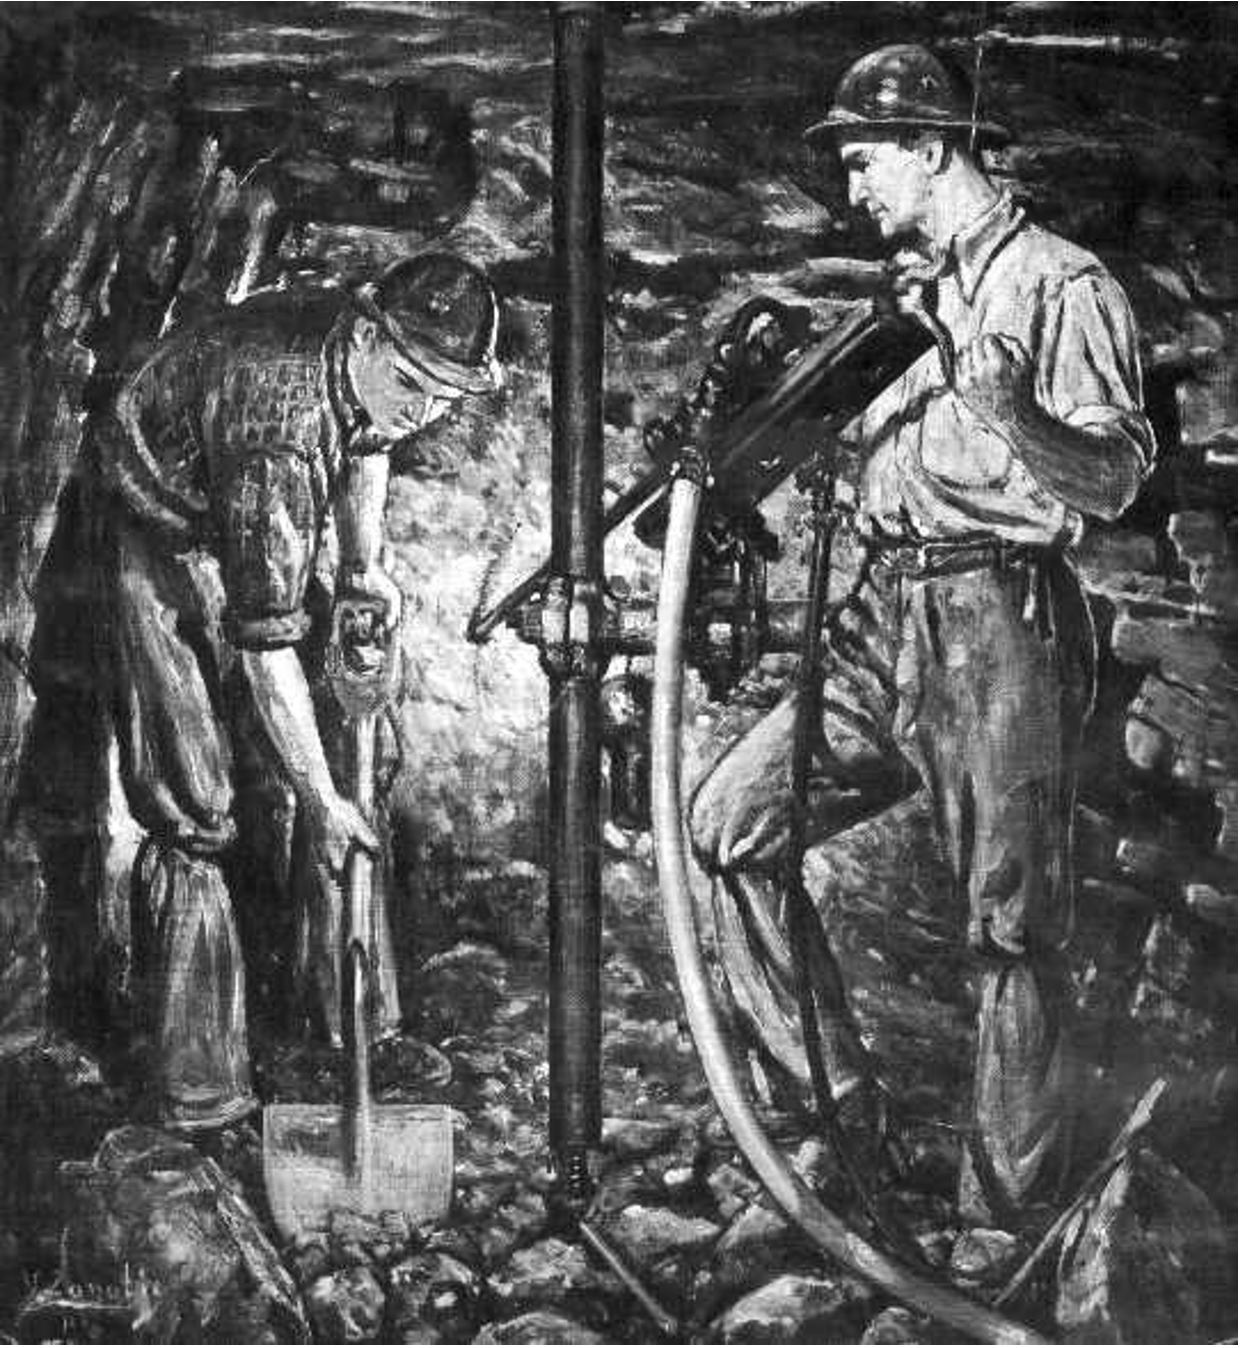 VZanalis The Driller, Yellowdine Mines (1938)